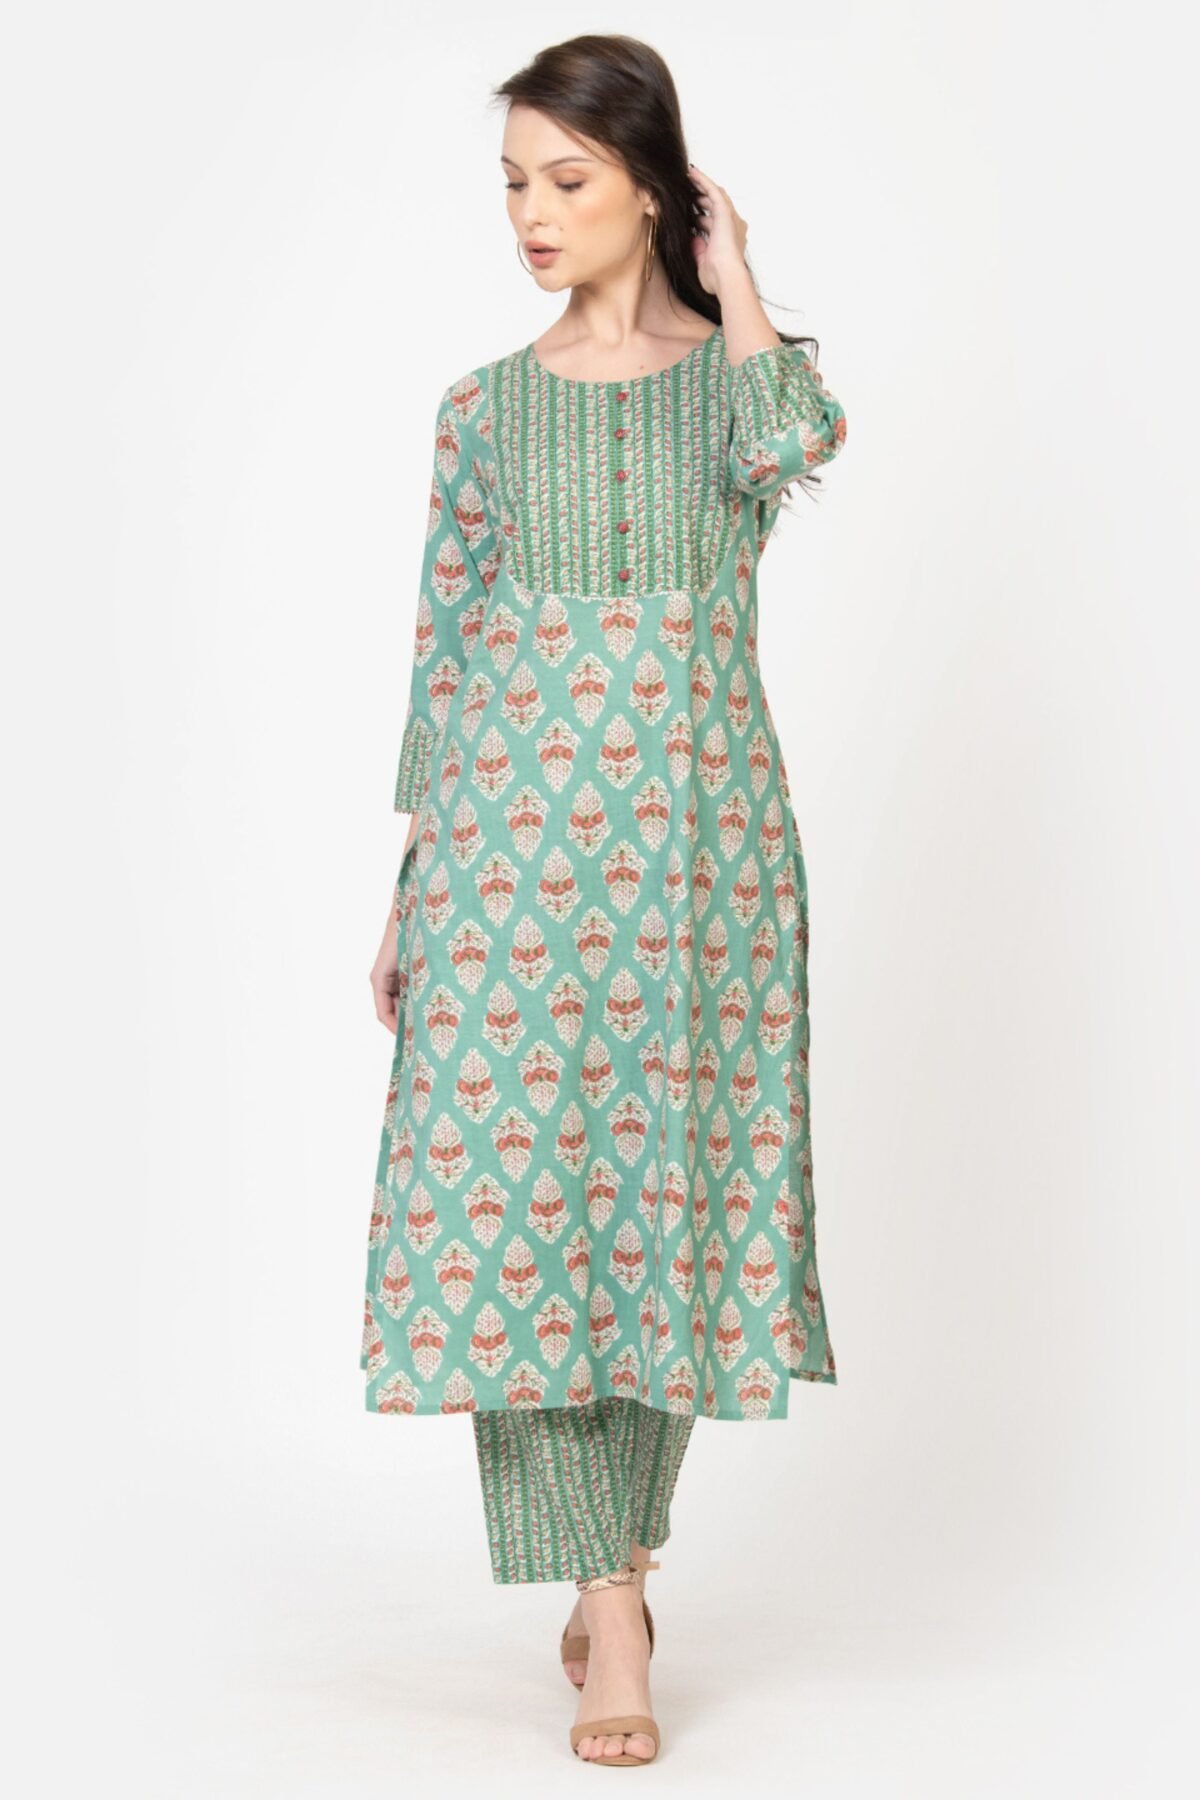 Women's Mughal Buta print in Green Straight kurta with pant Set